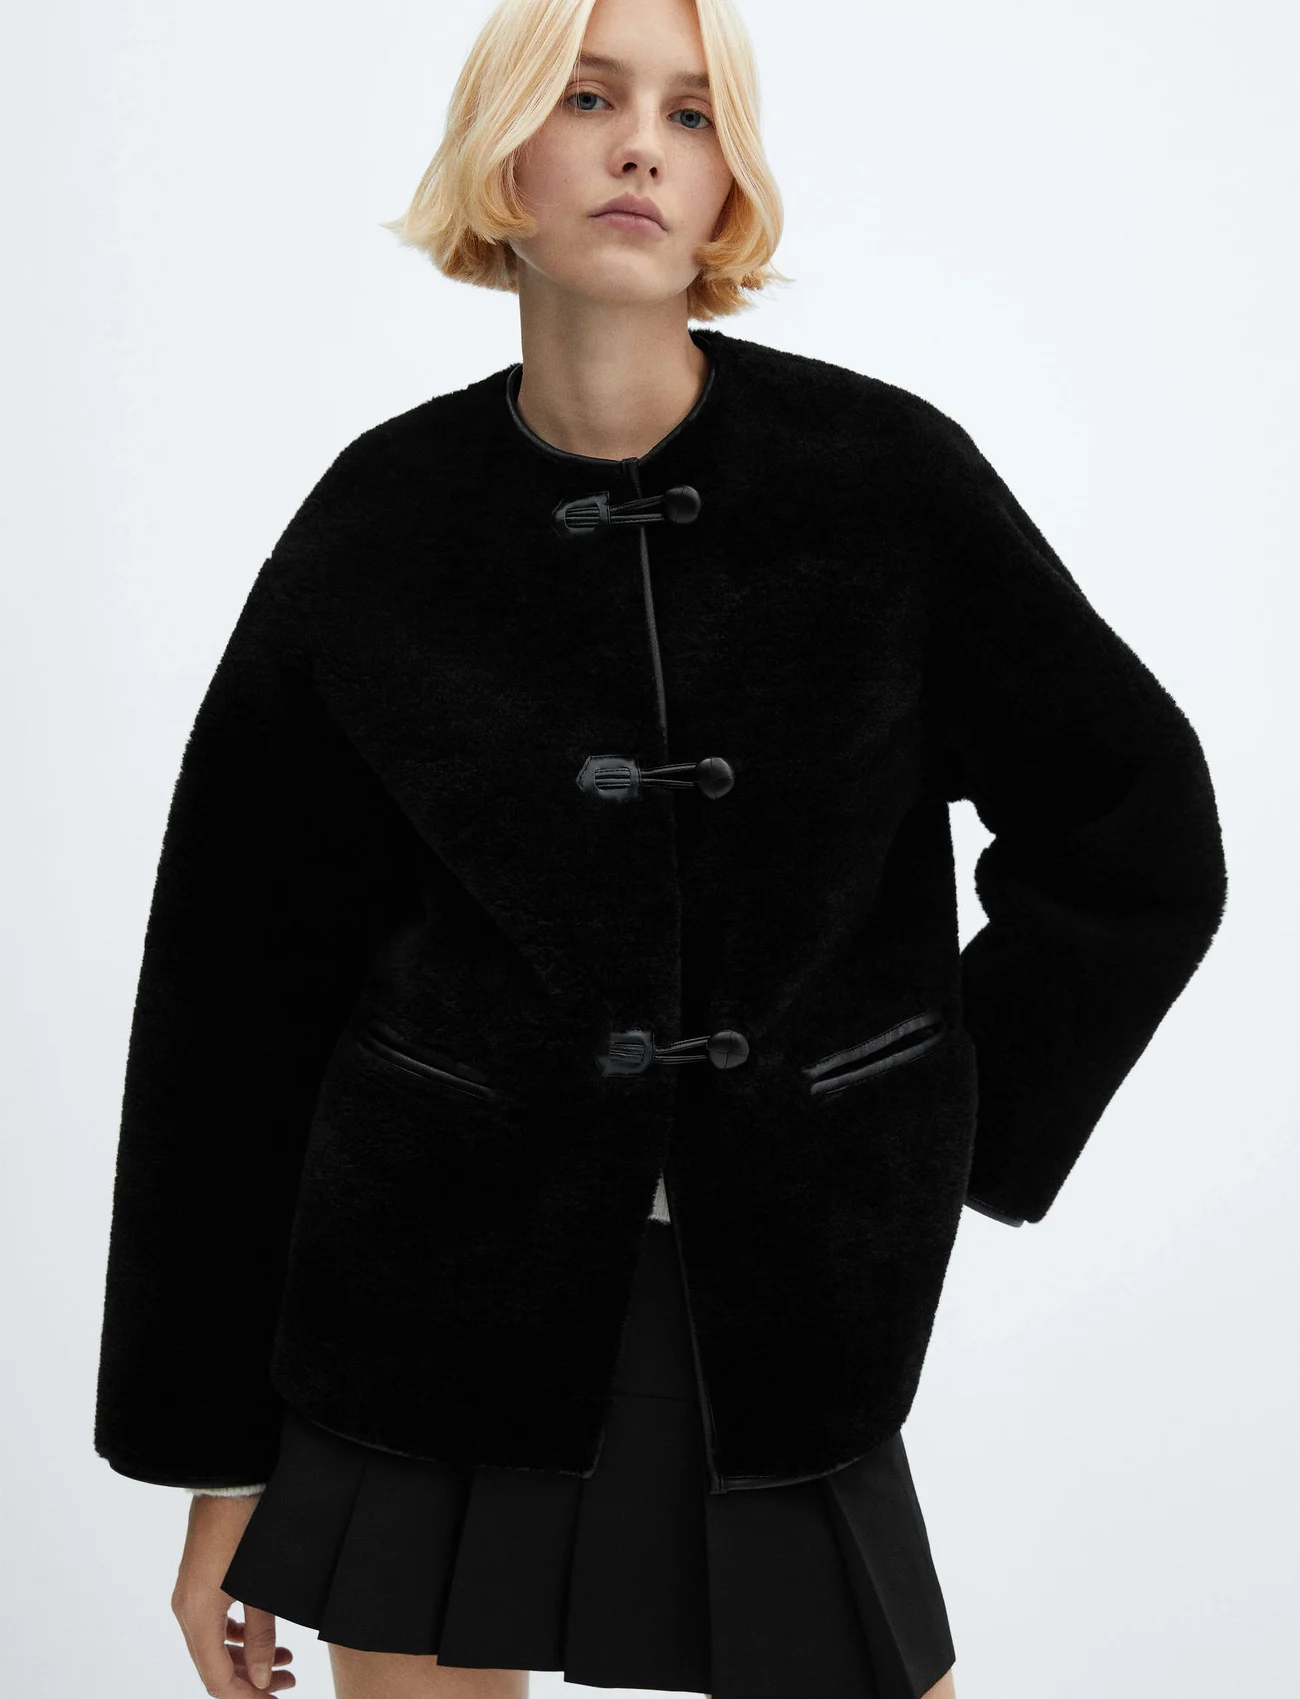 Mango - Fur-effect coat with appliqués - tekoturkit - black - 0